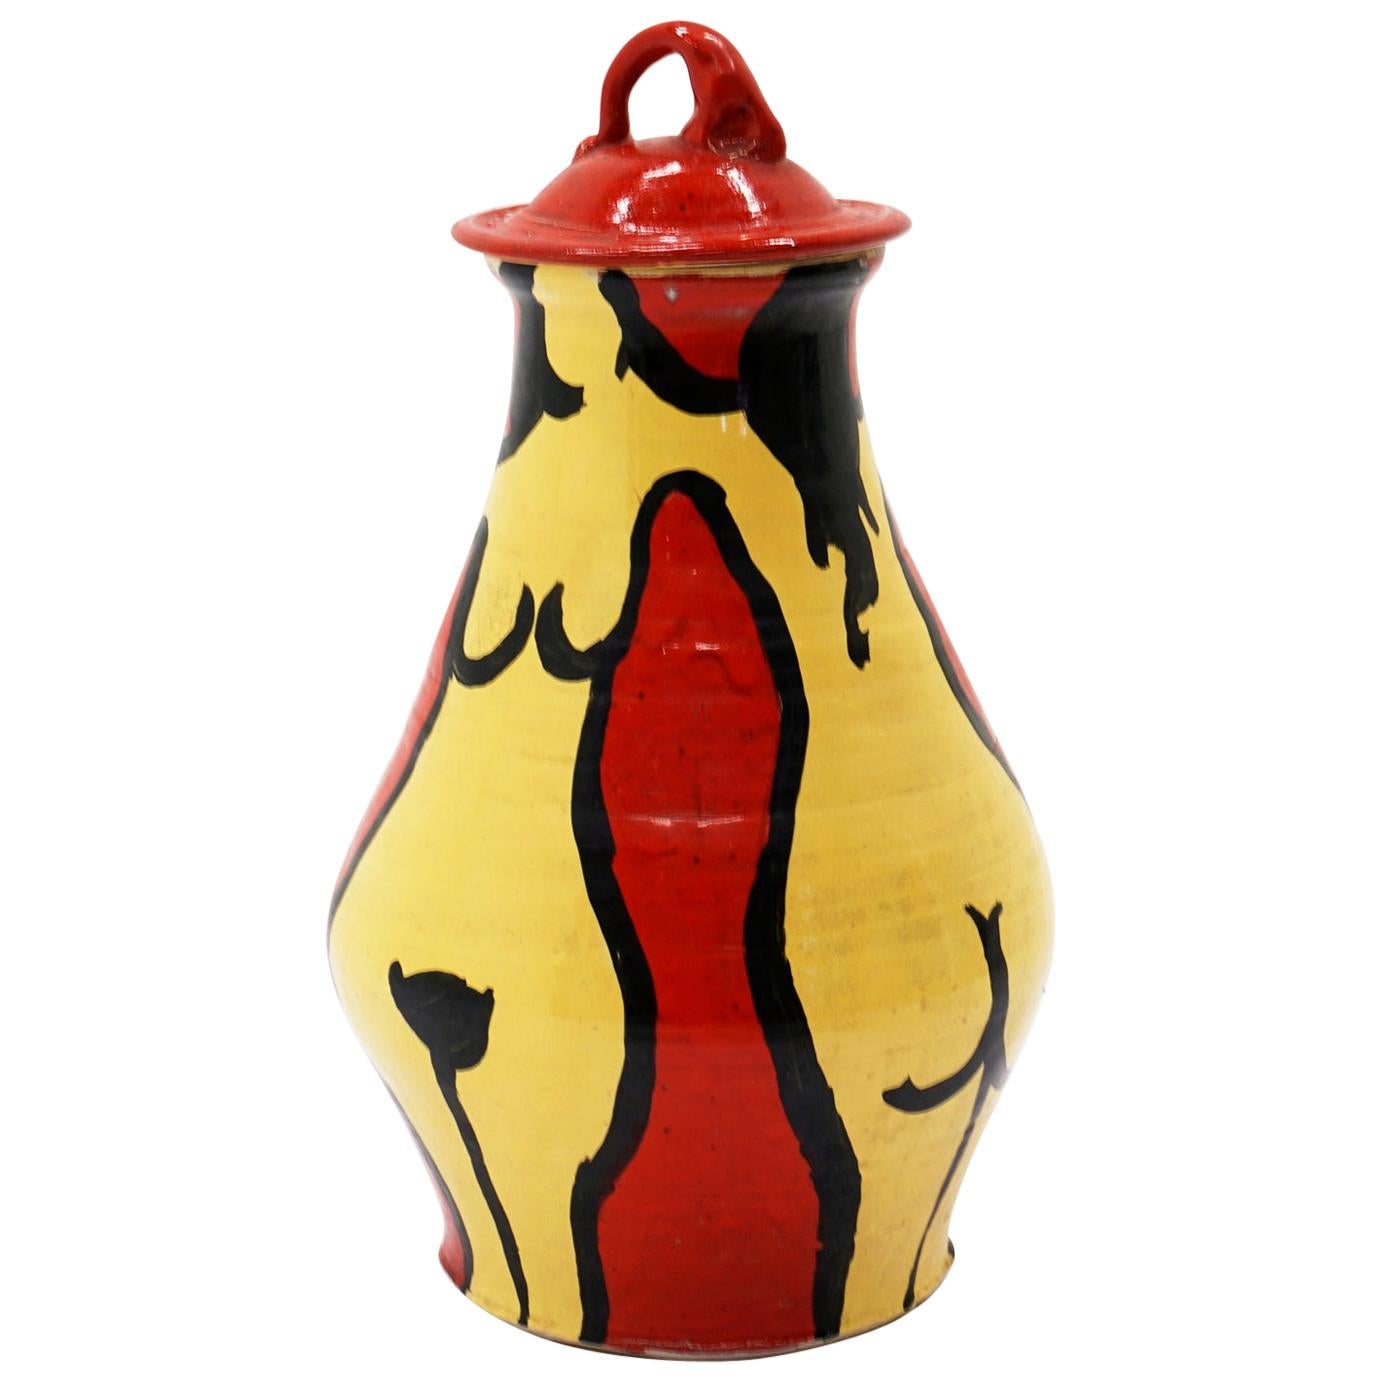 Art Pottery Lidded Vase by Ken Ferguson, Signed